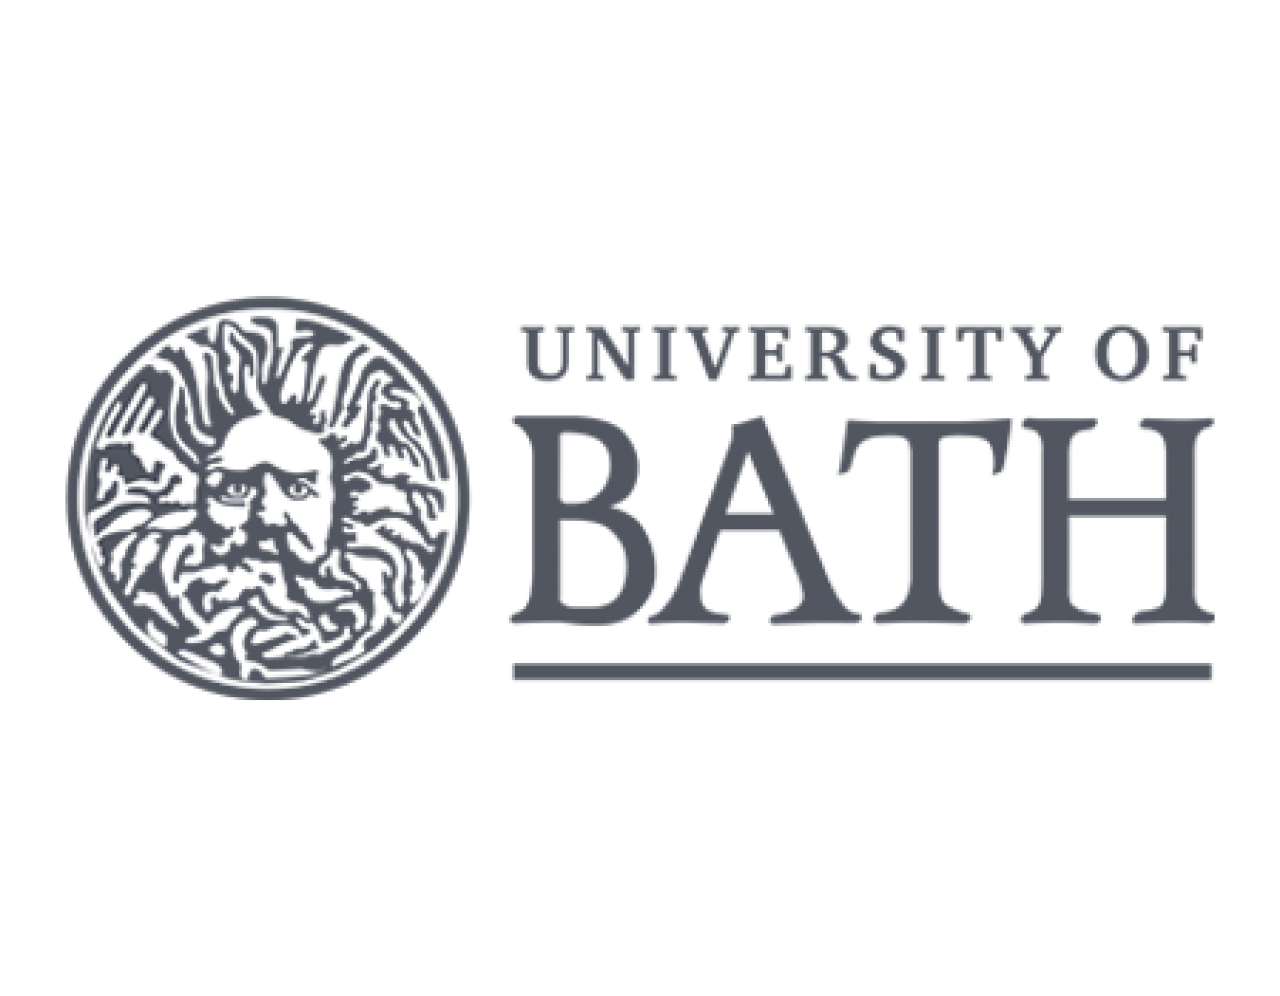 logo university of bath